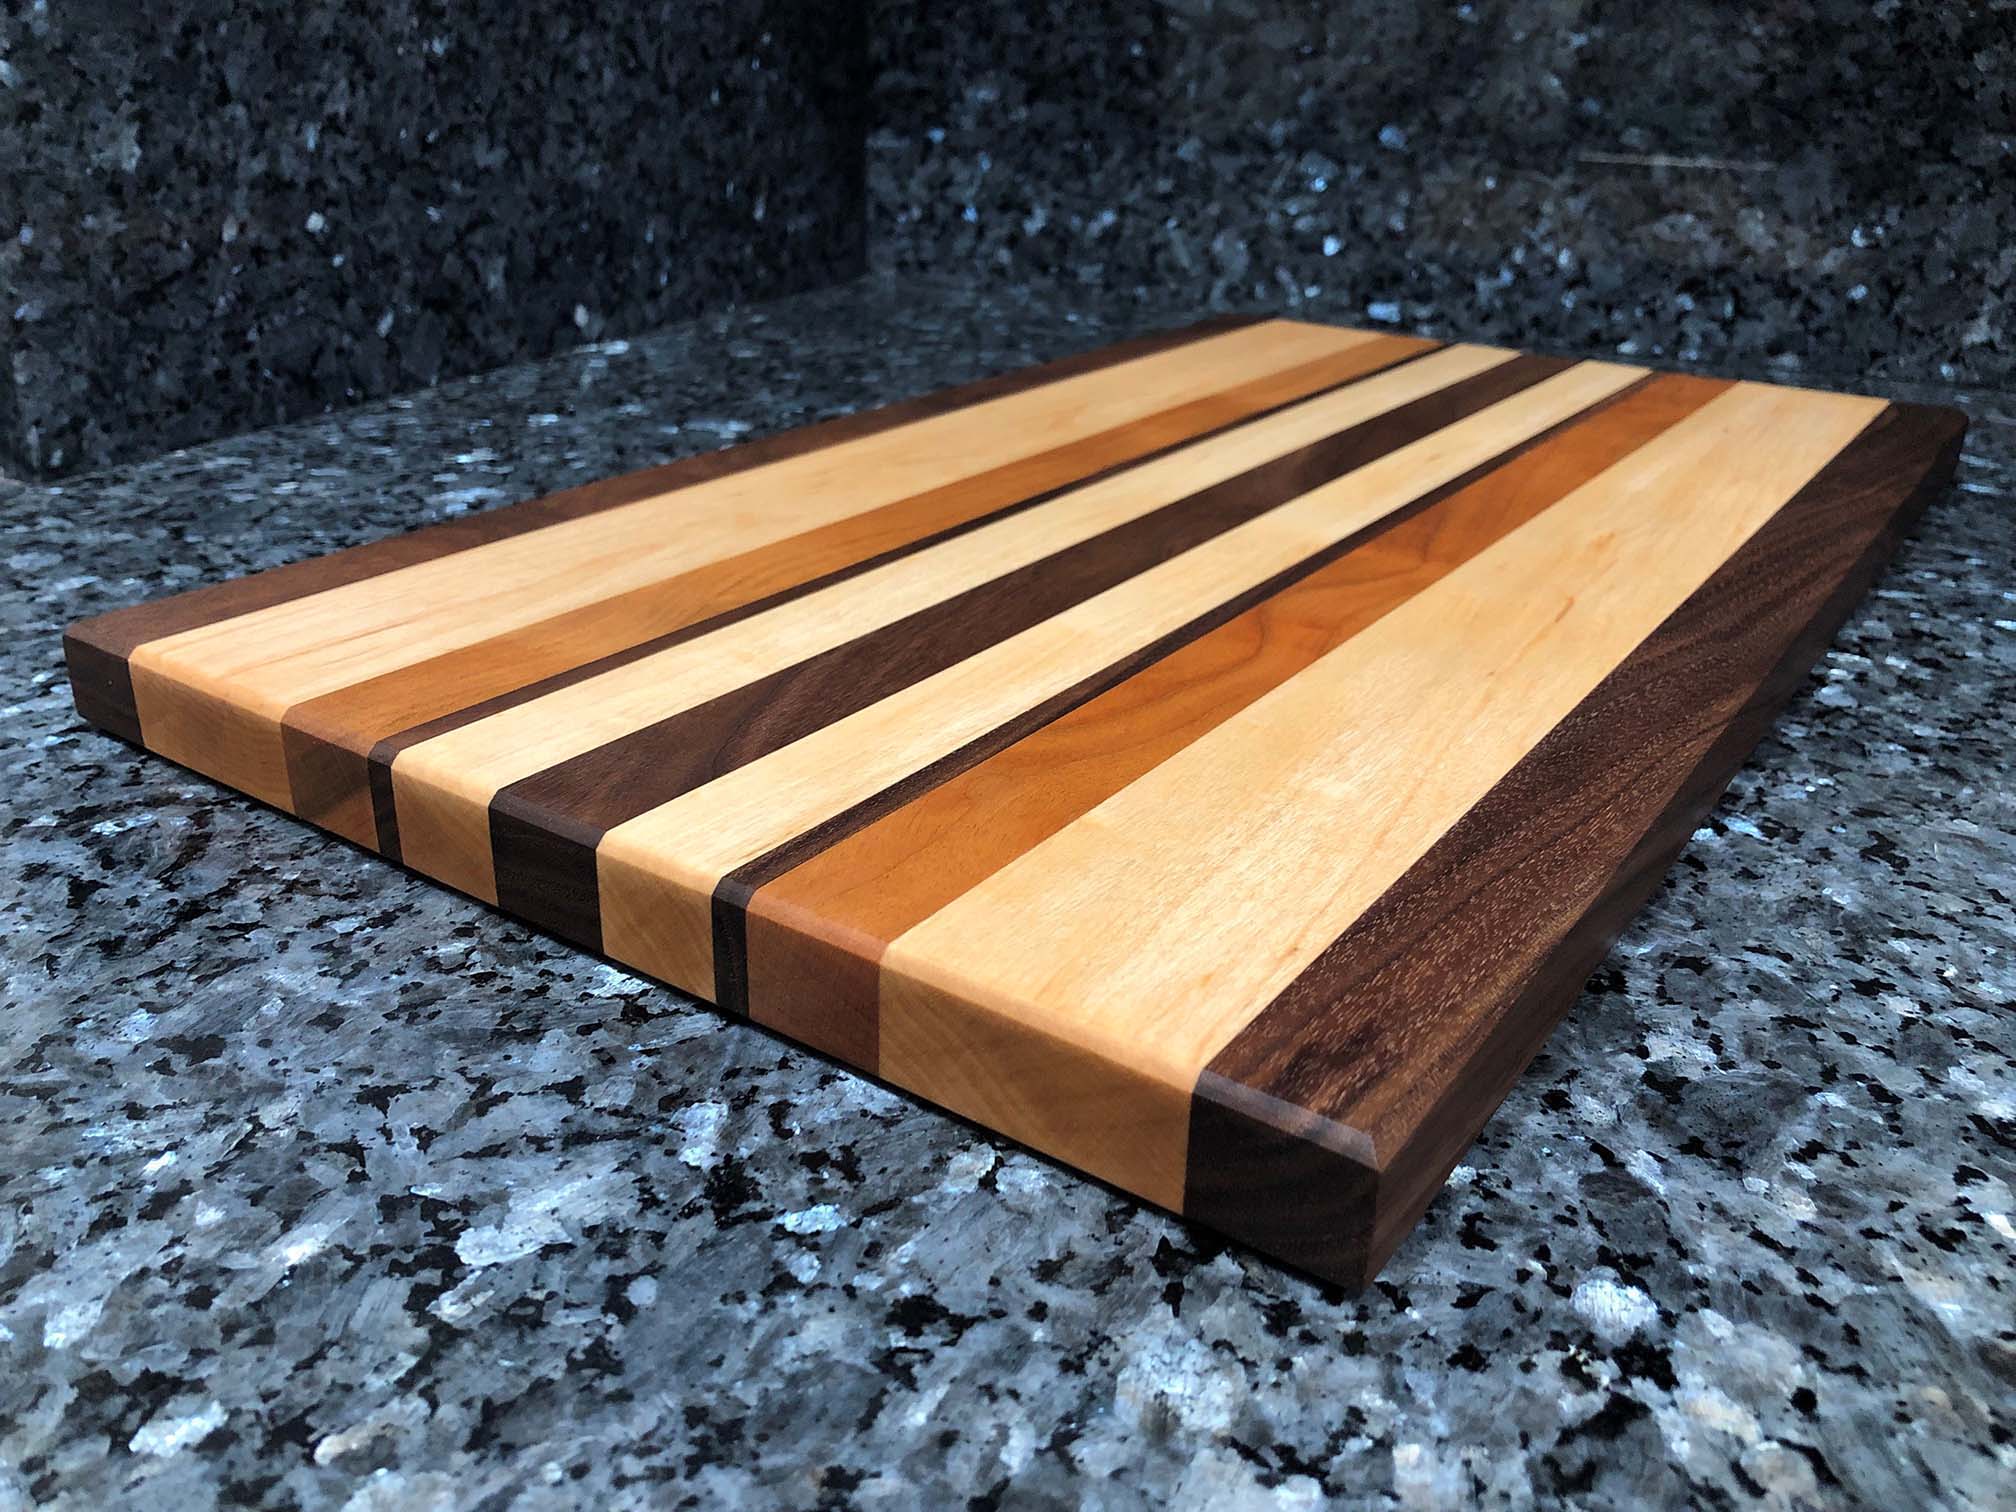 Maple and Walnut Checkered Chopping Board – Cutlery Luxury